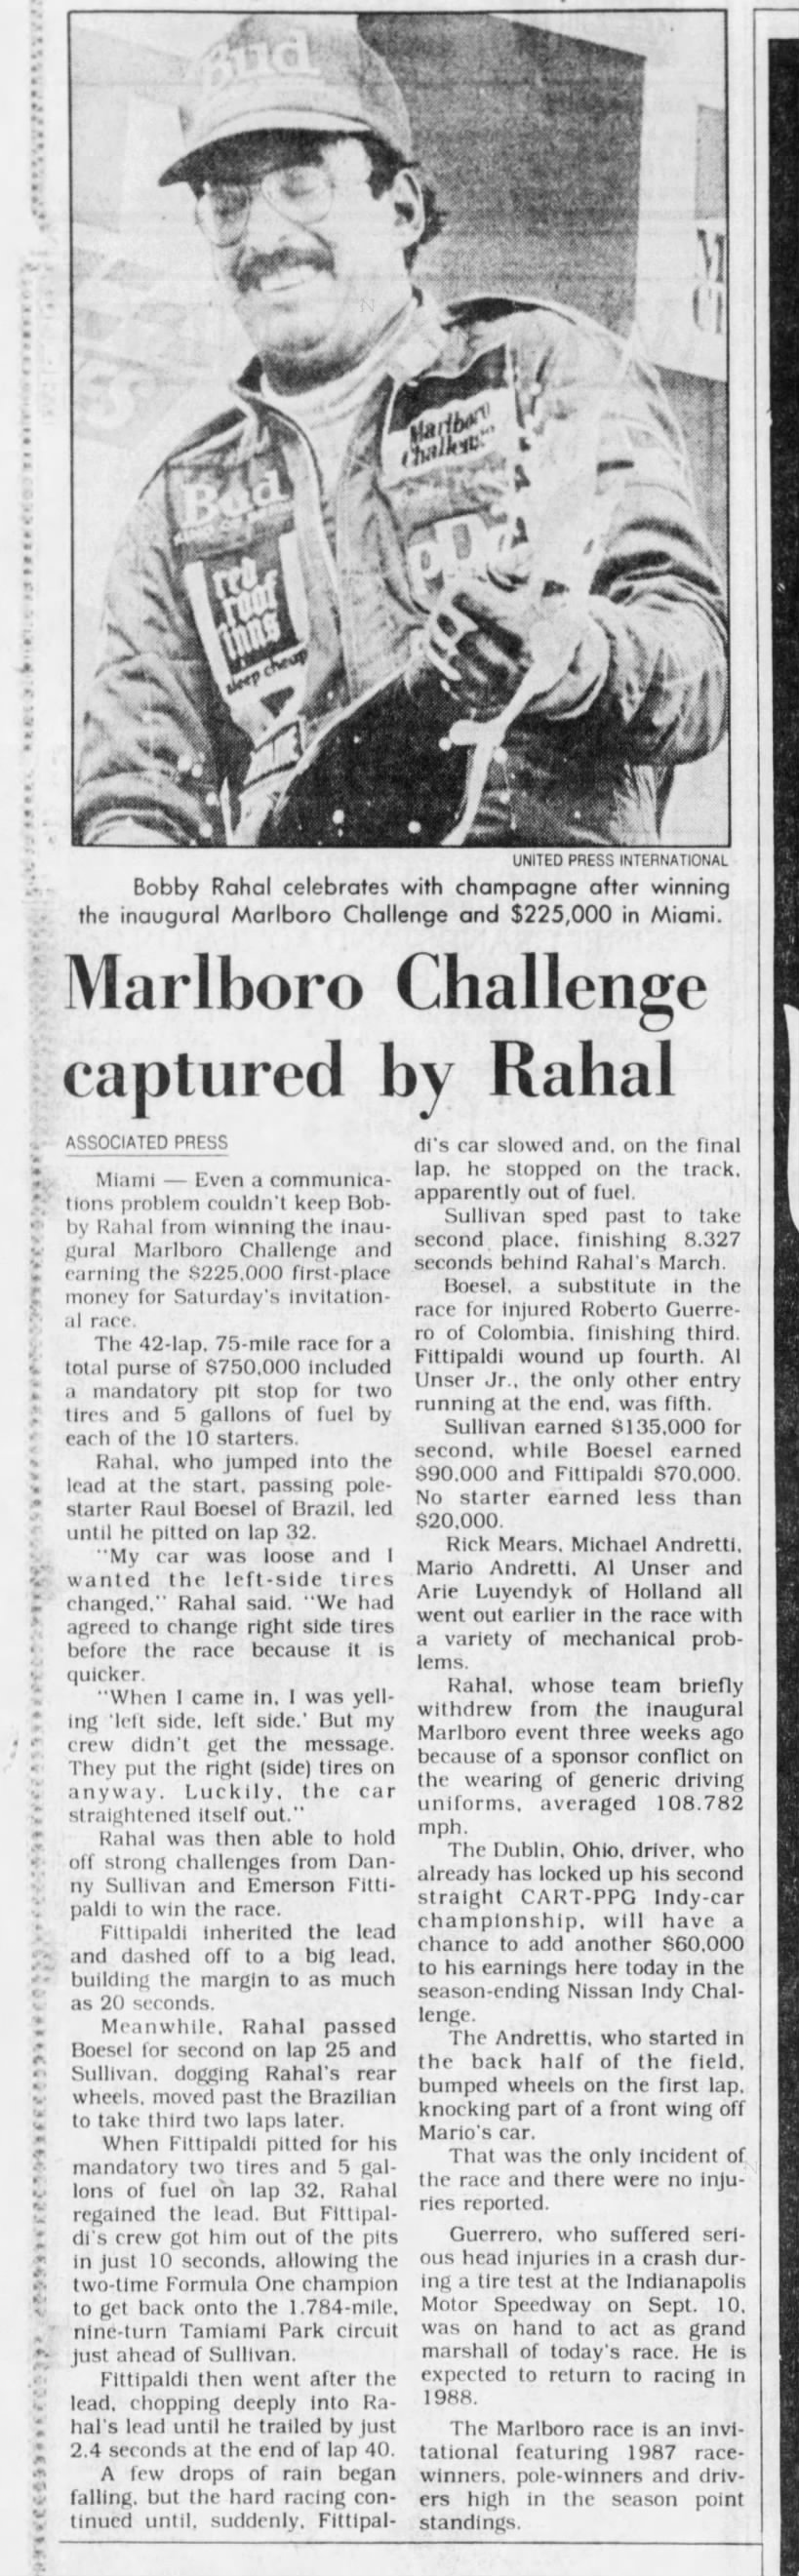 1987 Marlboro Challenge